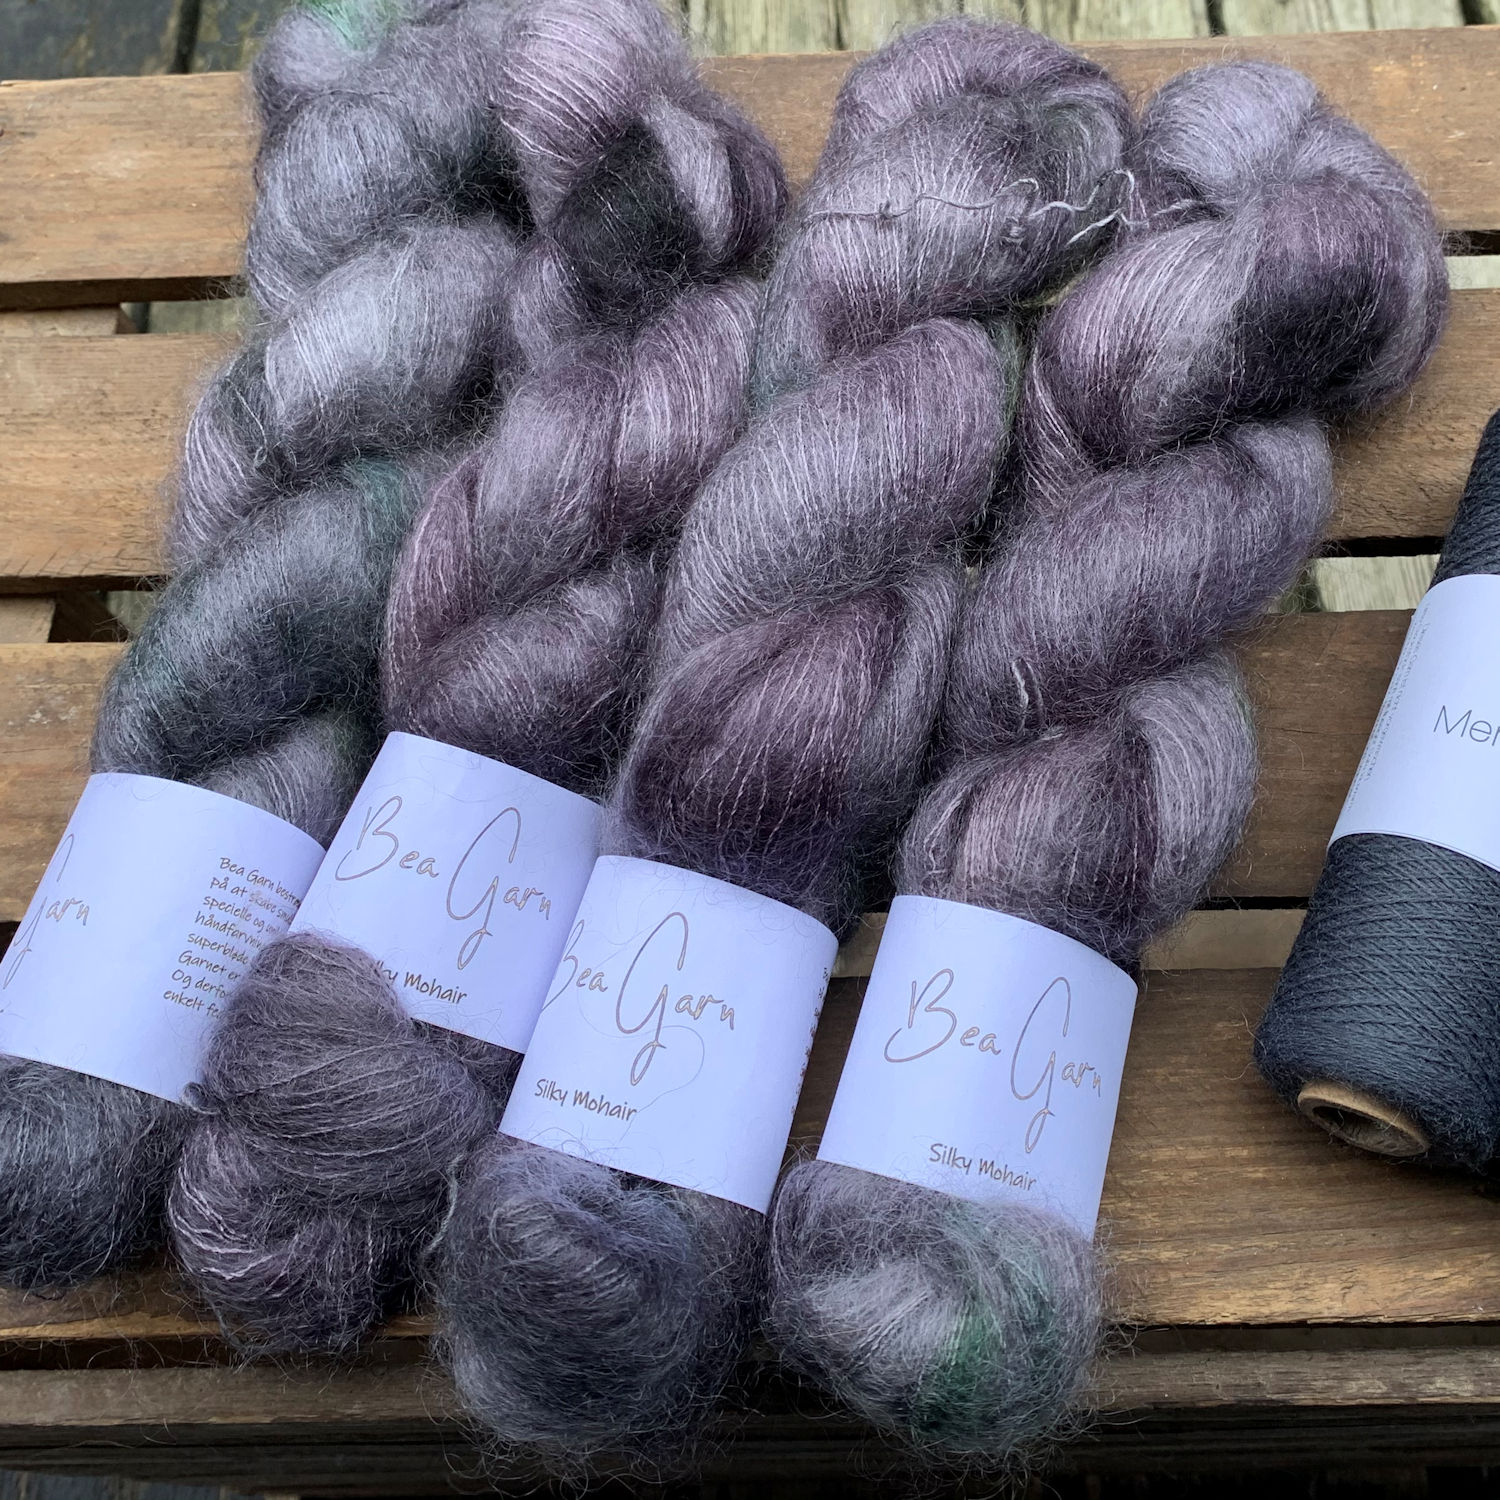 kok har Mange Bea Garn håndfarvet Silk Mohair - violet grå » Kreativgarn.dk